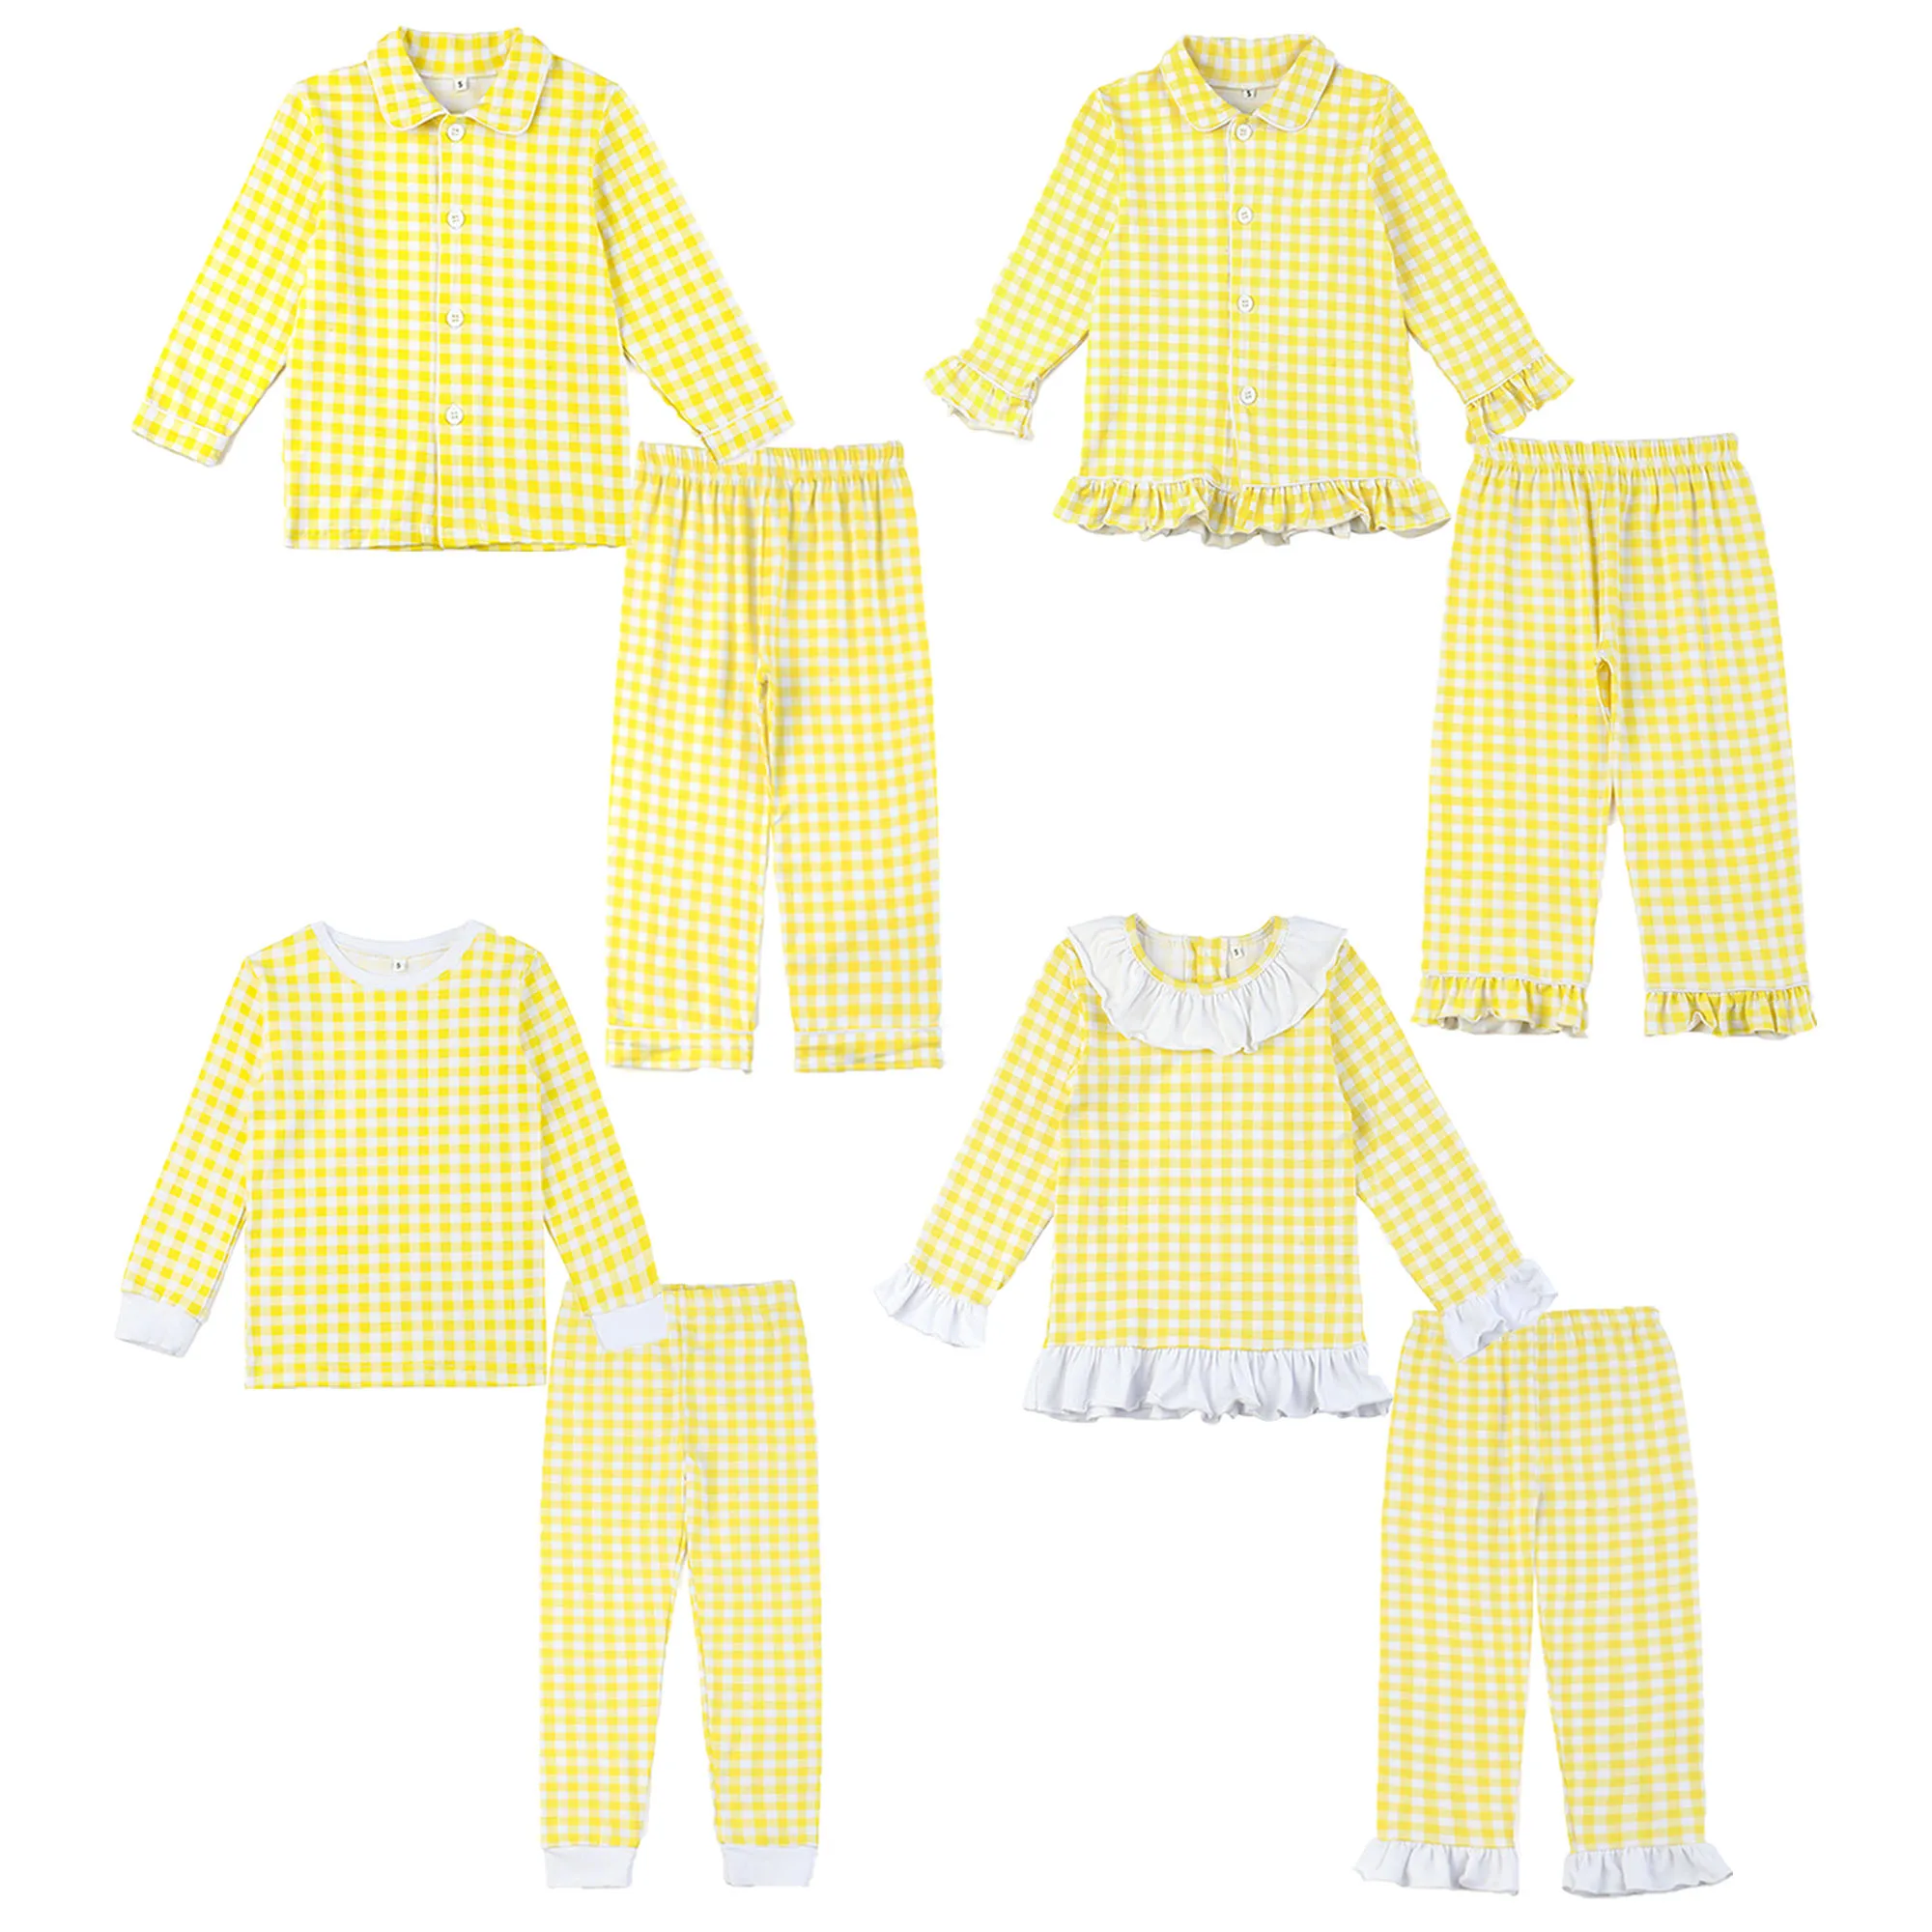 Cheap Baby Toddler Kids Boys And Girls Yellow Checkered Pyjamas Clothes Set Cotton Children Pajamas